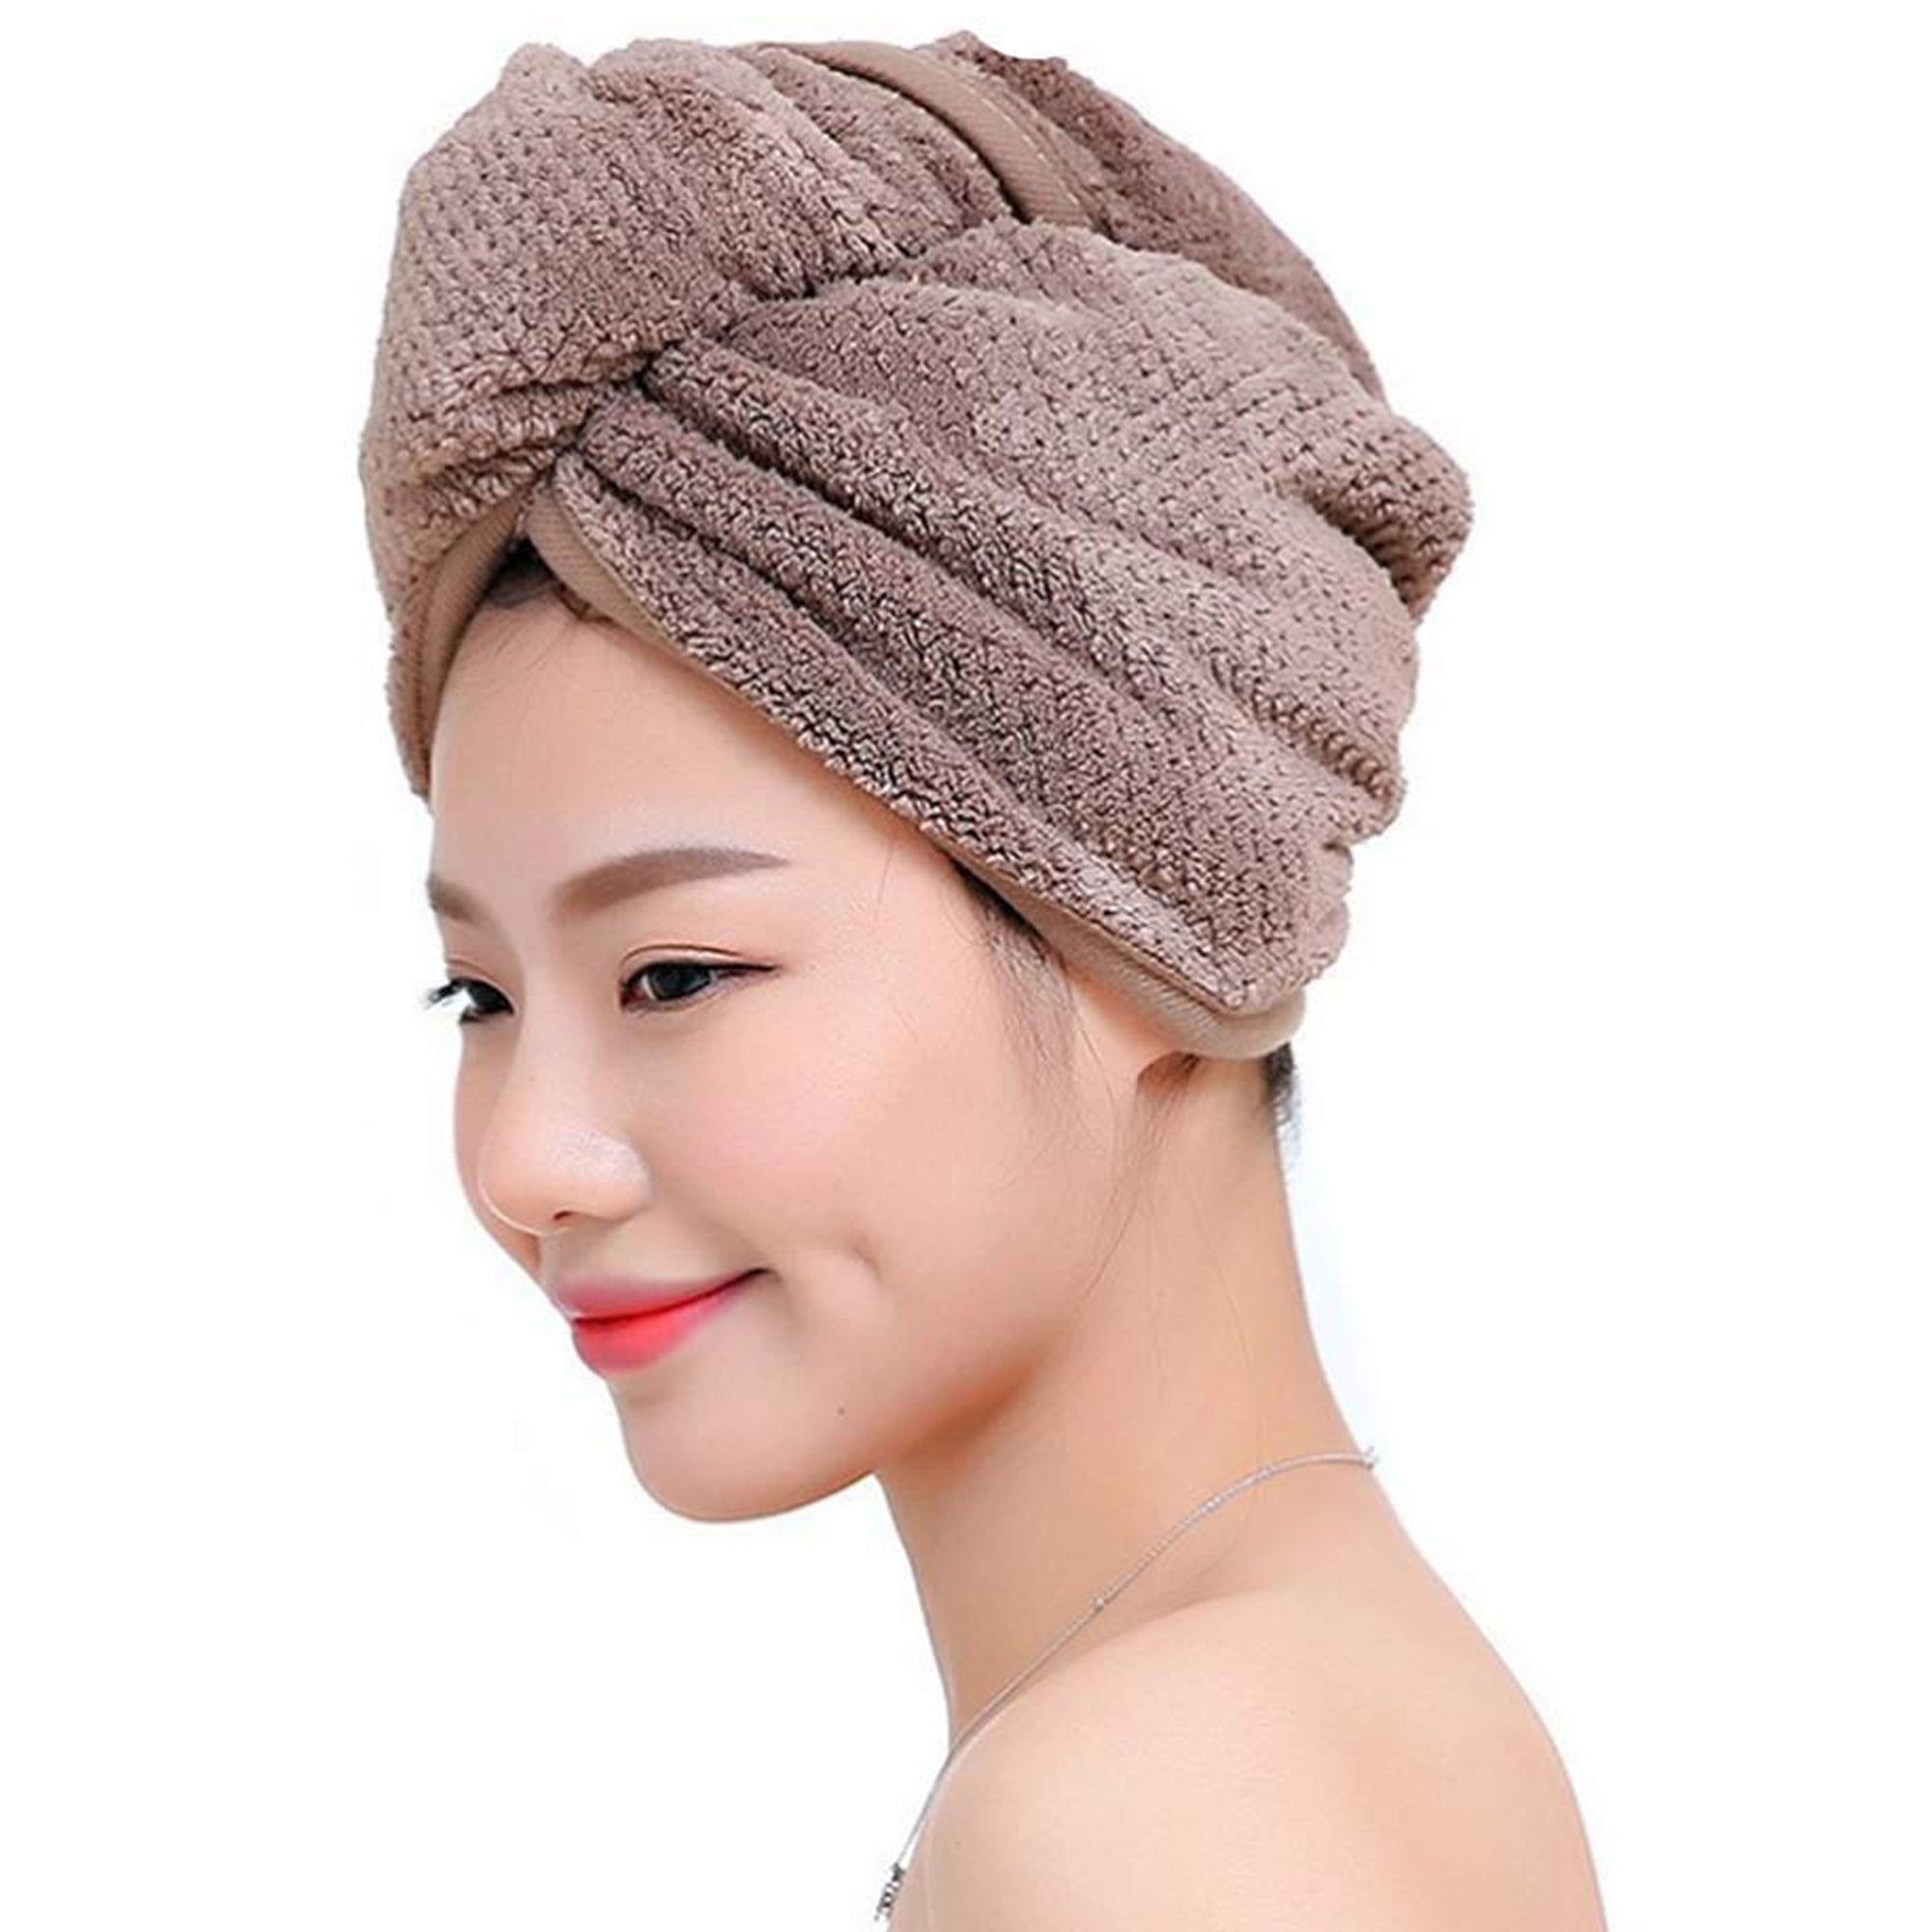 women Quick Dry Magic Hair Turban Towel Microfibre Wrap Bath Cap Hat New2020BLUS 